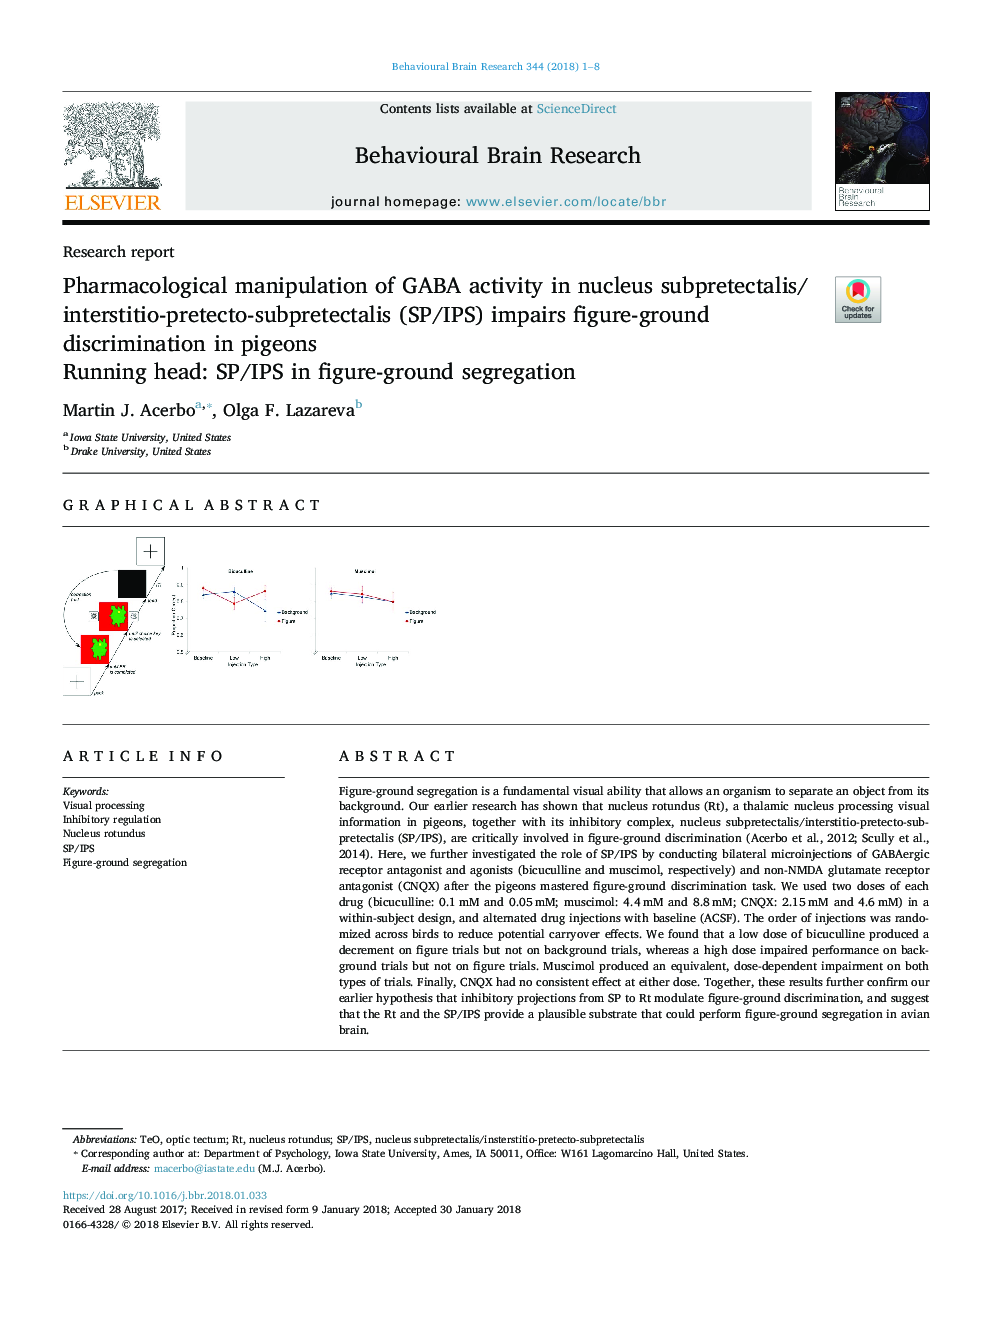 Pharmacological manipulation of GABA activity in nucleus subpretectalis/interstitio-pretecto-subpretectalis (SP/IPS) impairs figure-ground discrimination in pigeons